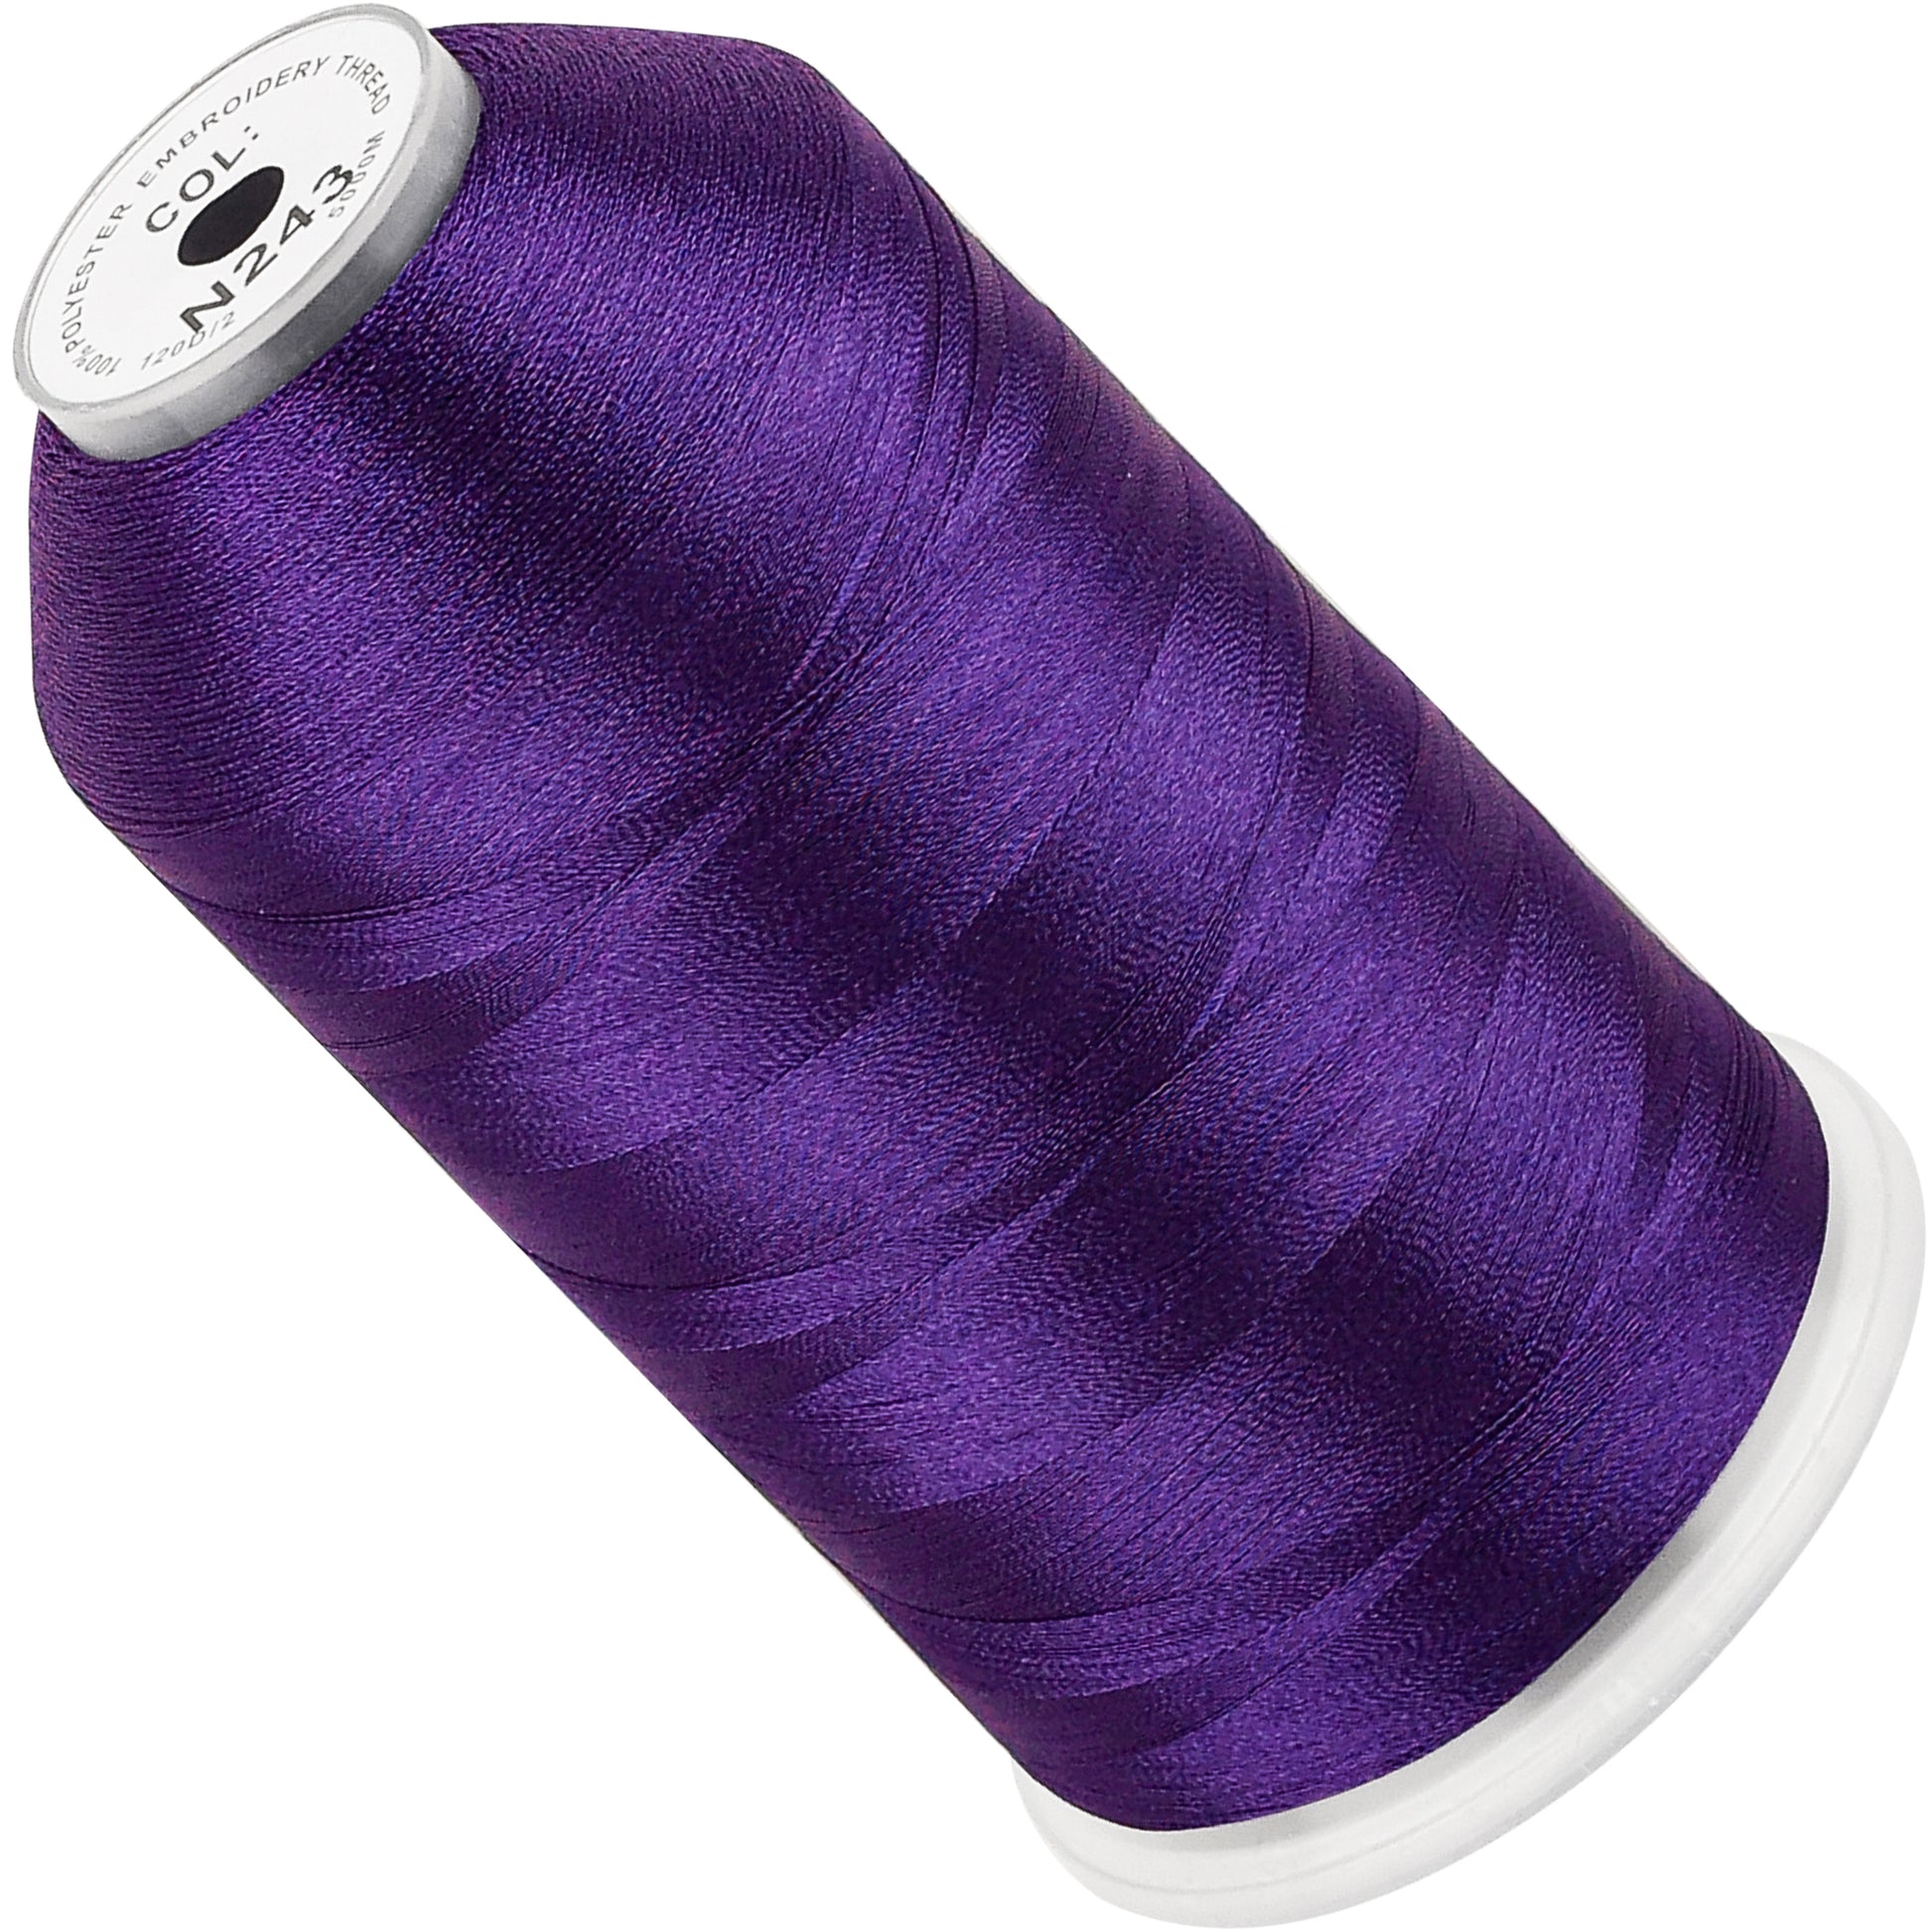 No. 38 silk embroidery thread / 100% silk thread /hand embroidery embroider  cross stitch/Rose purple /